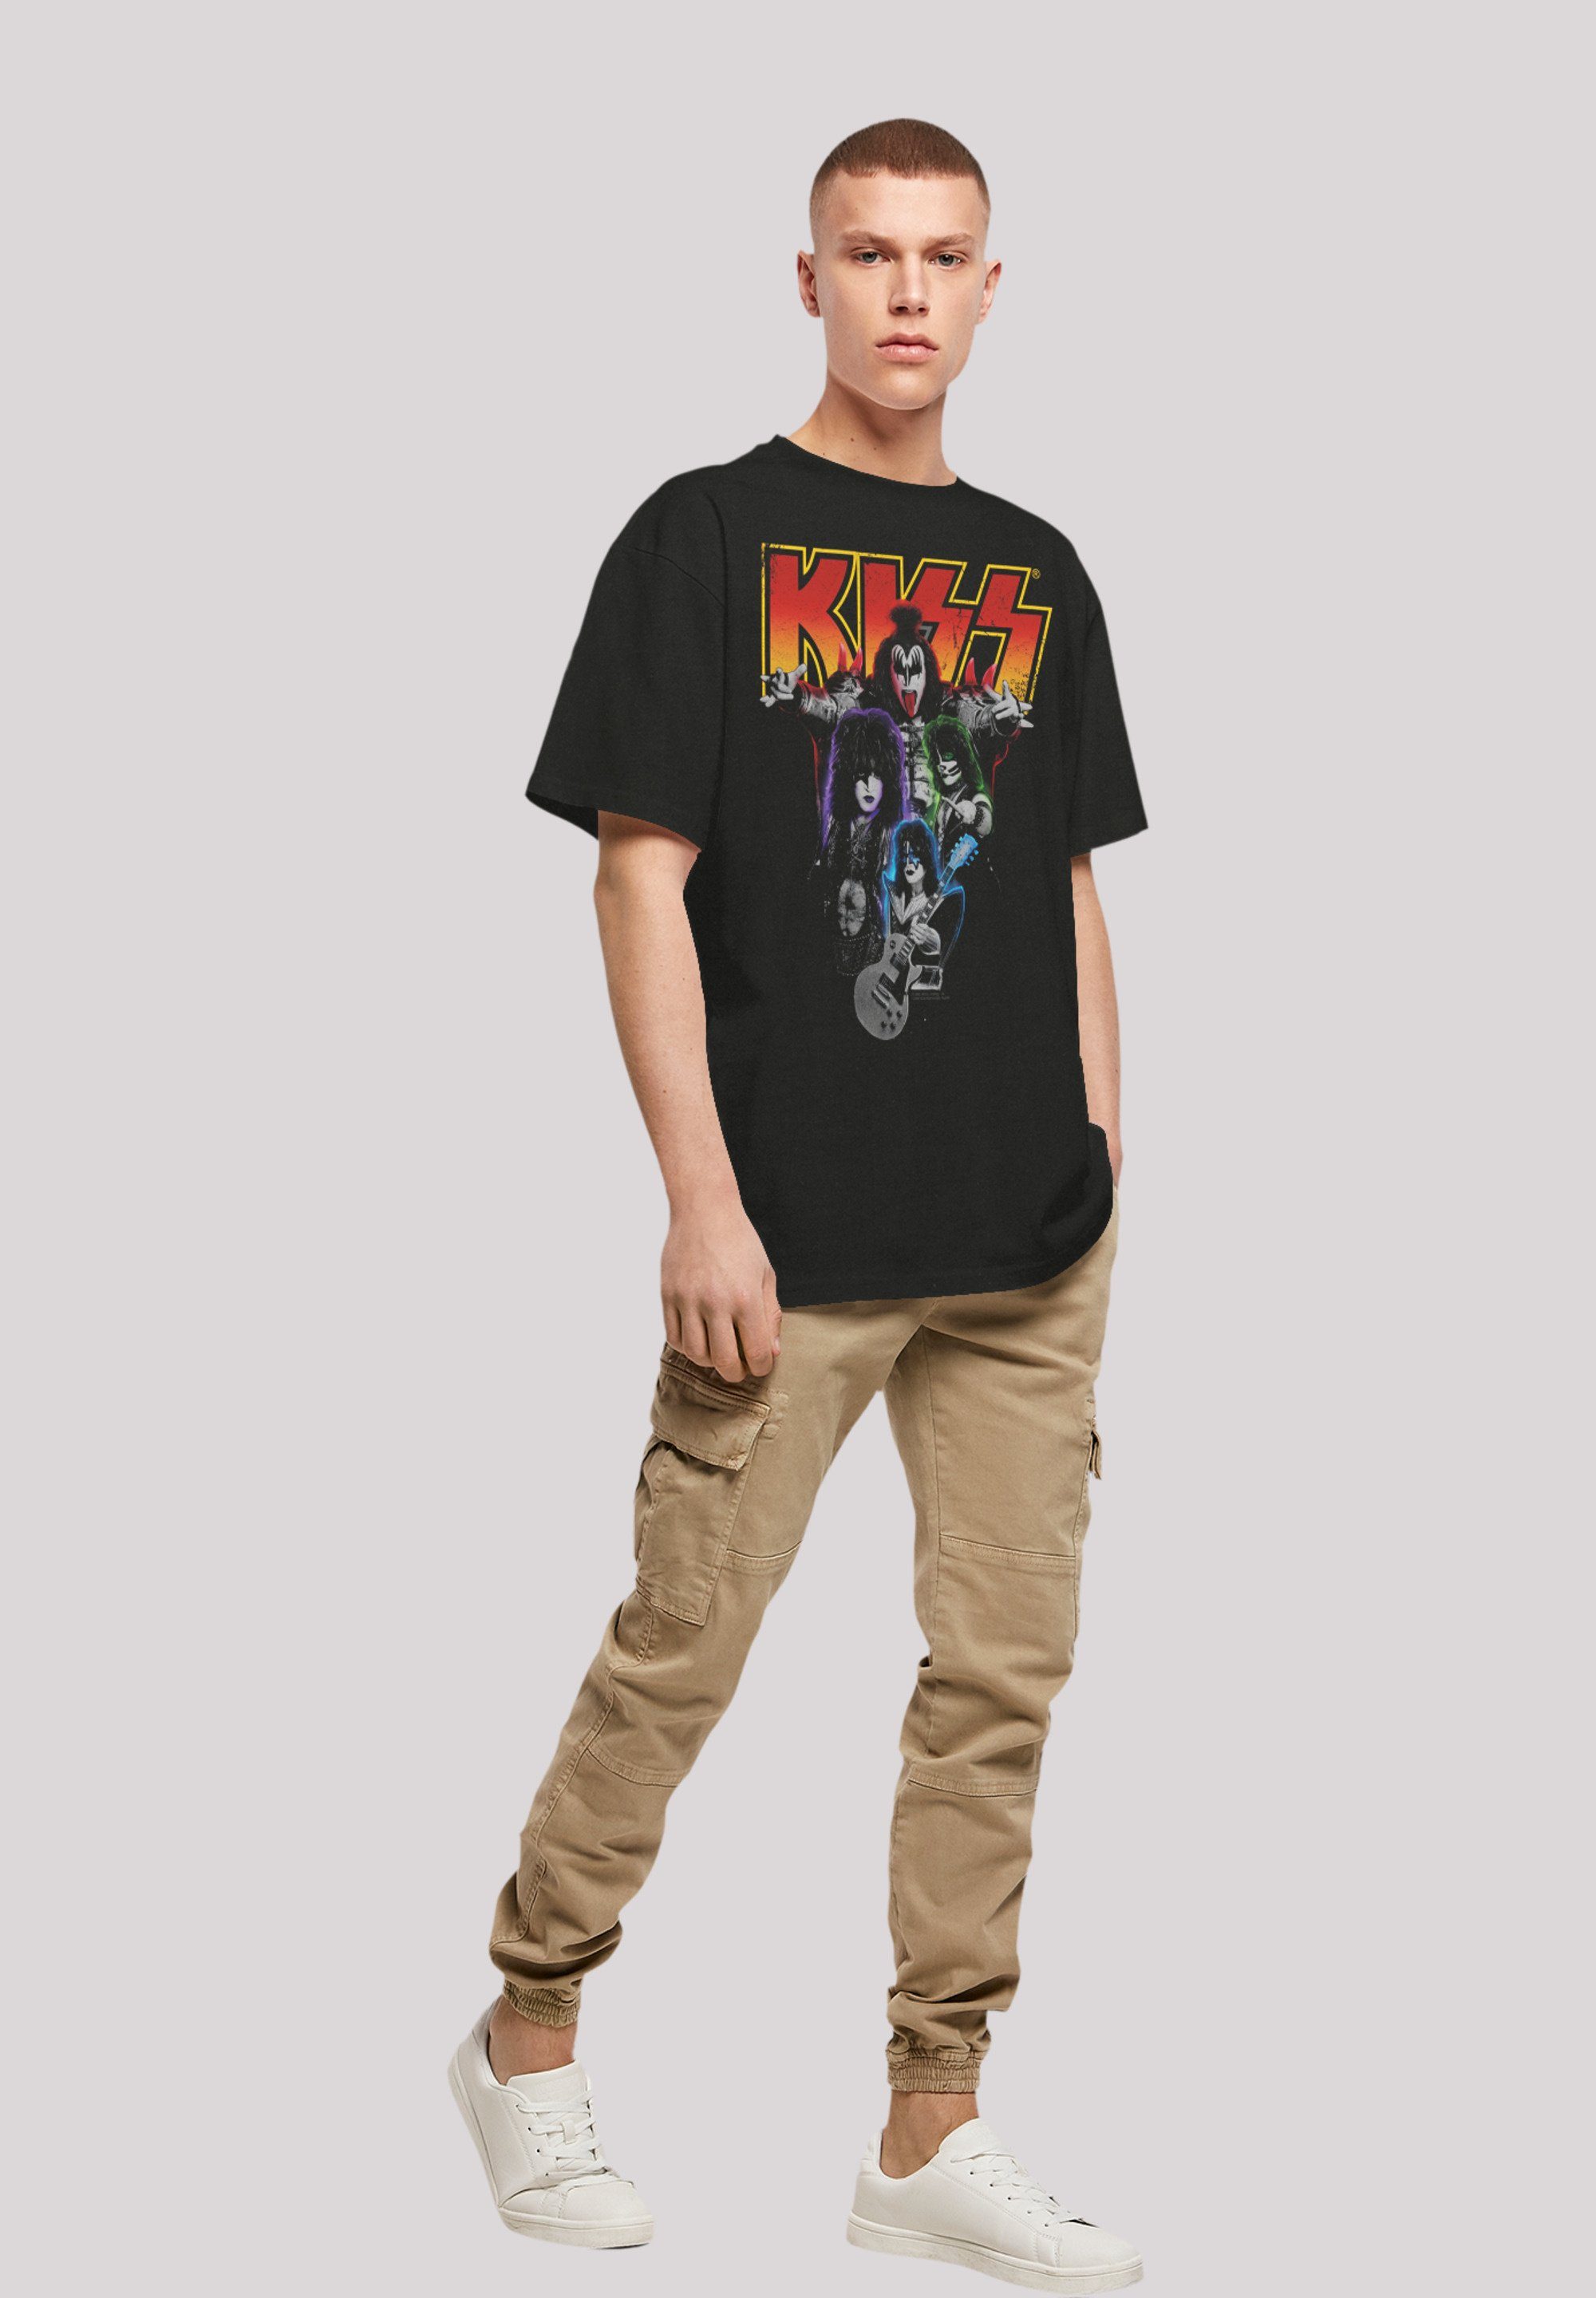 Off F4NT4STIC Band Musik, Kiss Premium Qualität, T-Shirt By Rock Neon Rock